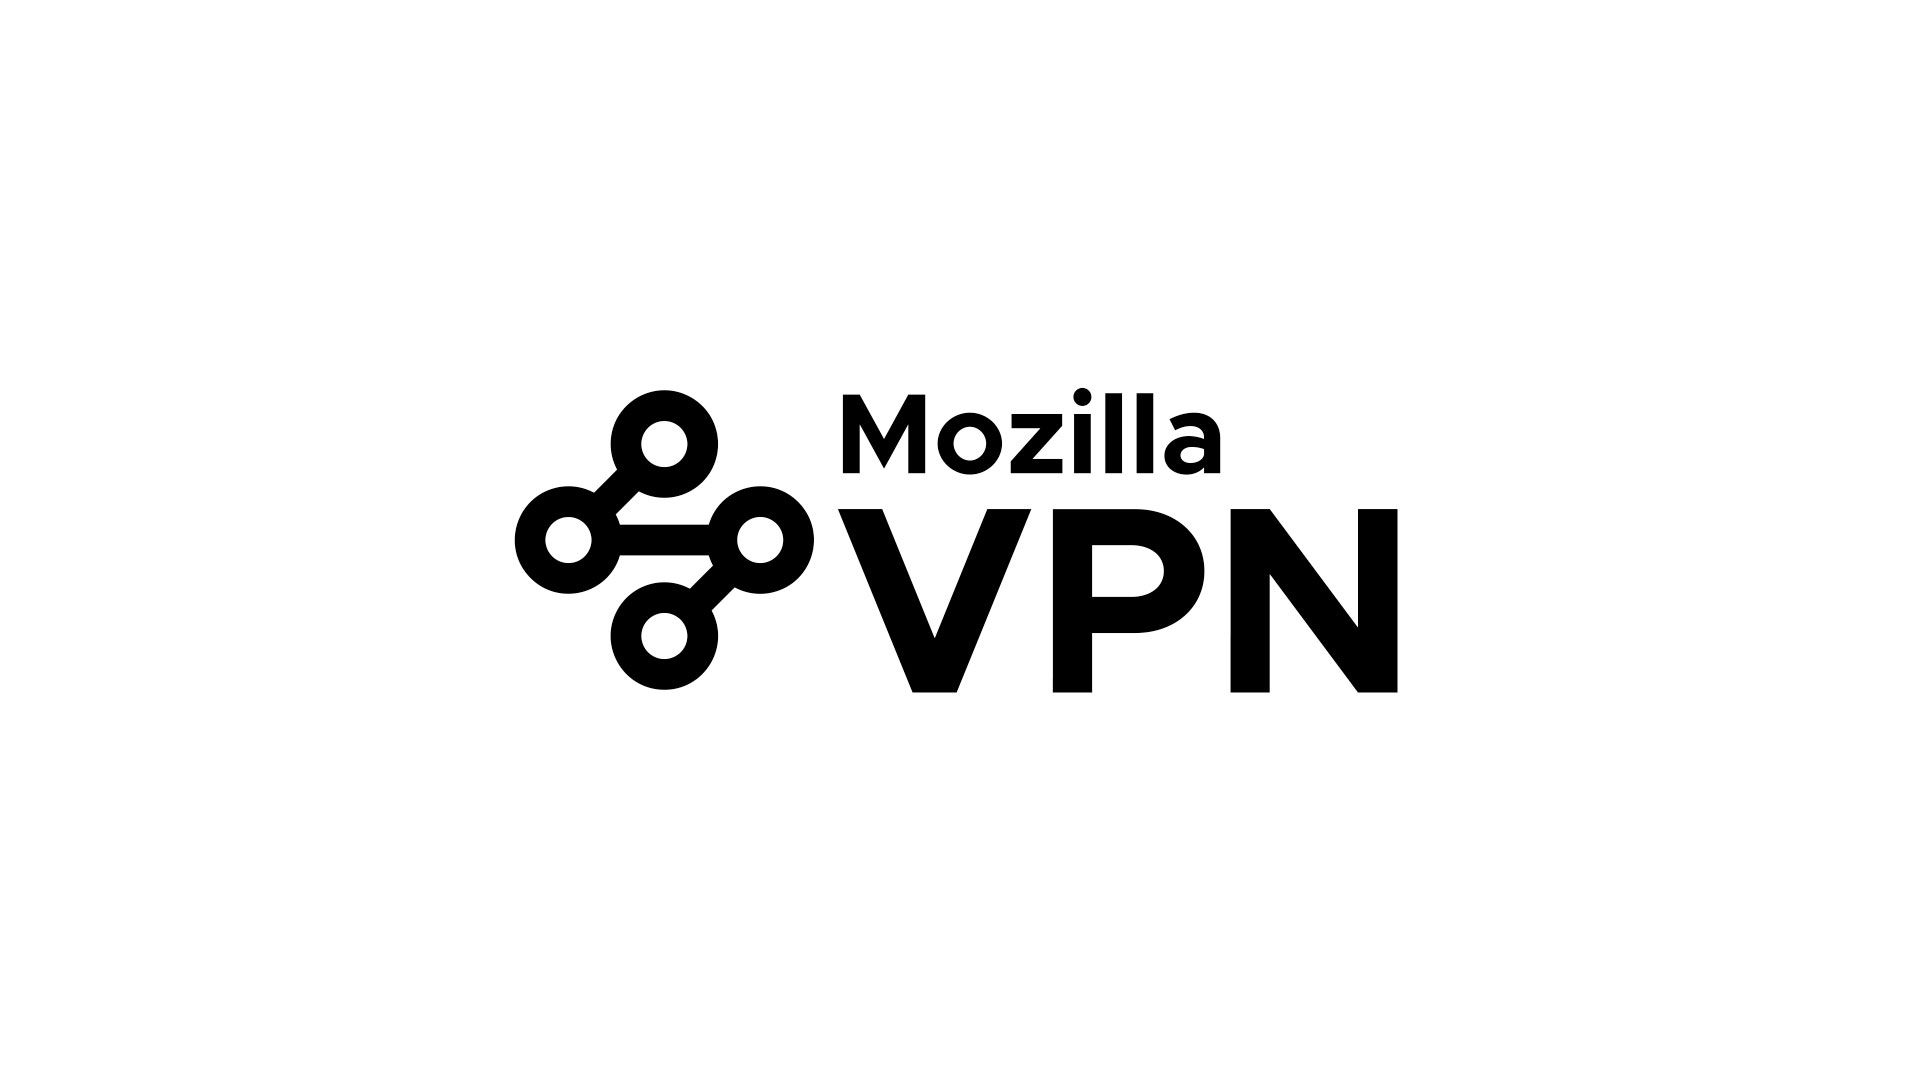 Mozilla VPN on a white background